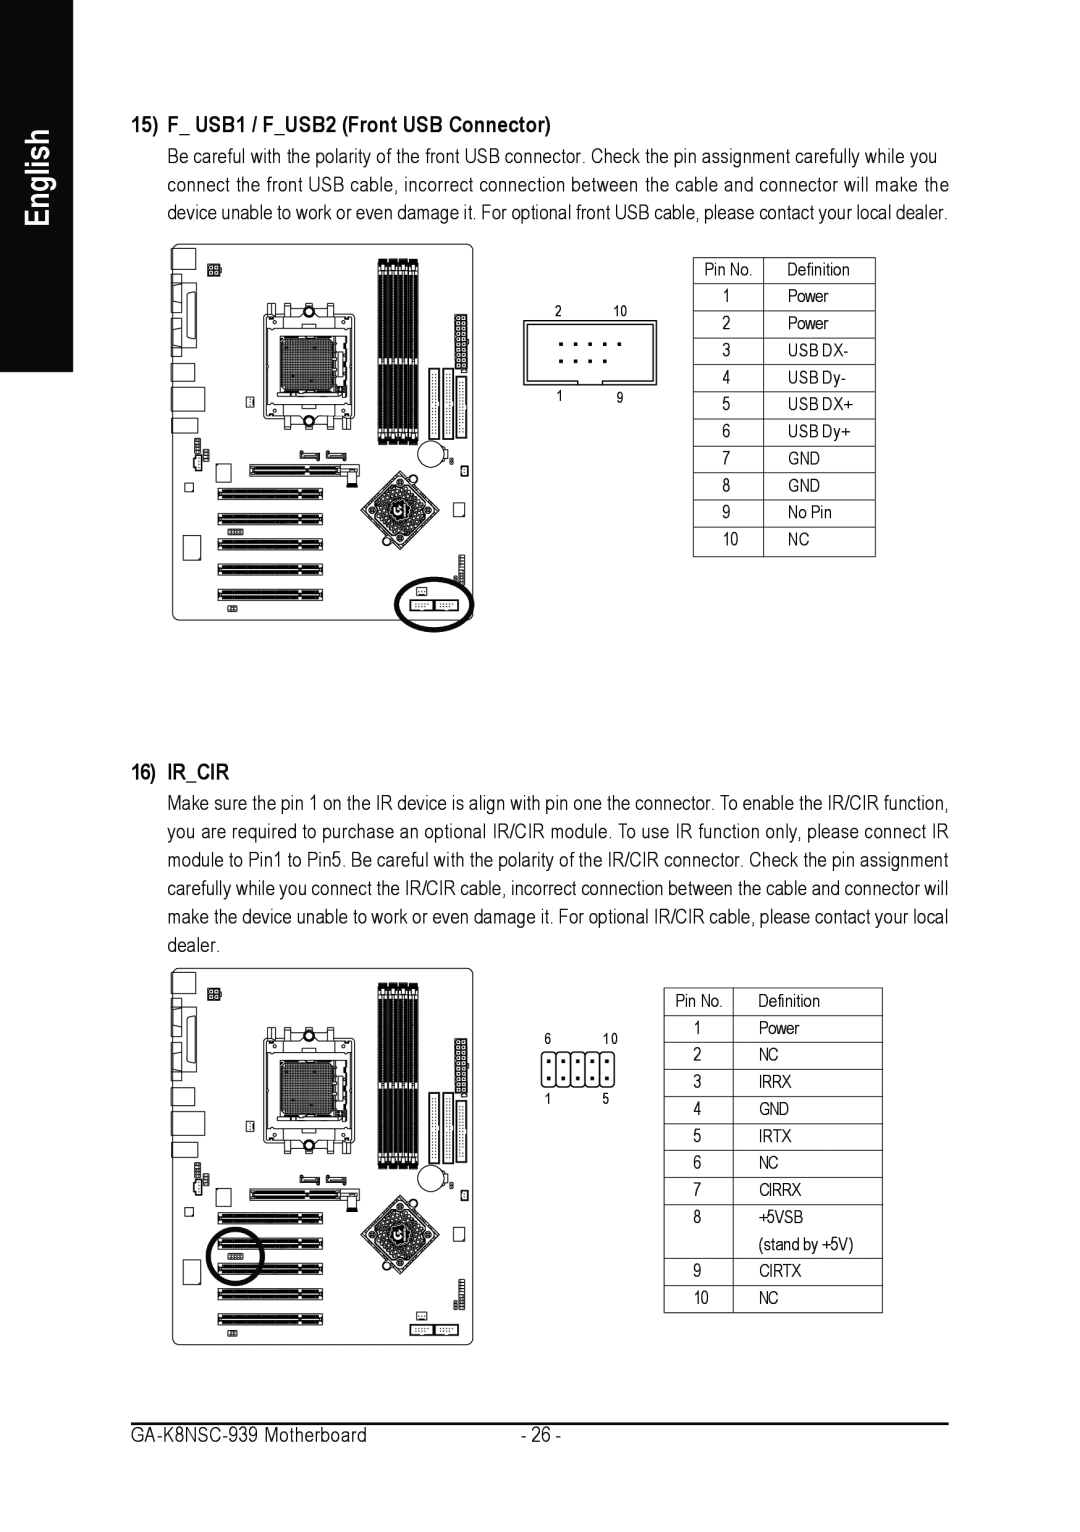 AMD GA-K8NSC-939 user manual F USB1 / FUSB2 Front USB Connector, Ircir, English 